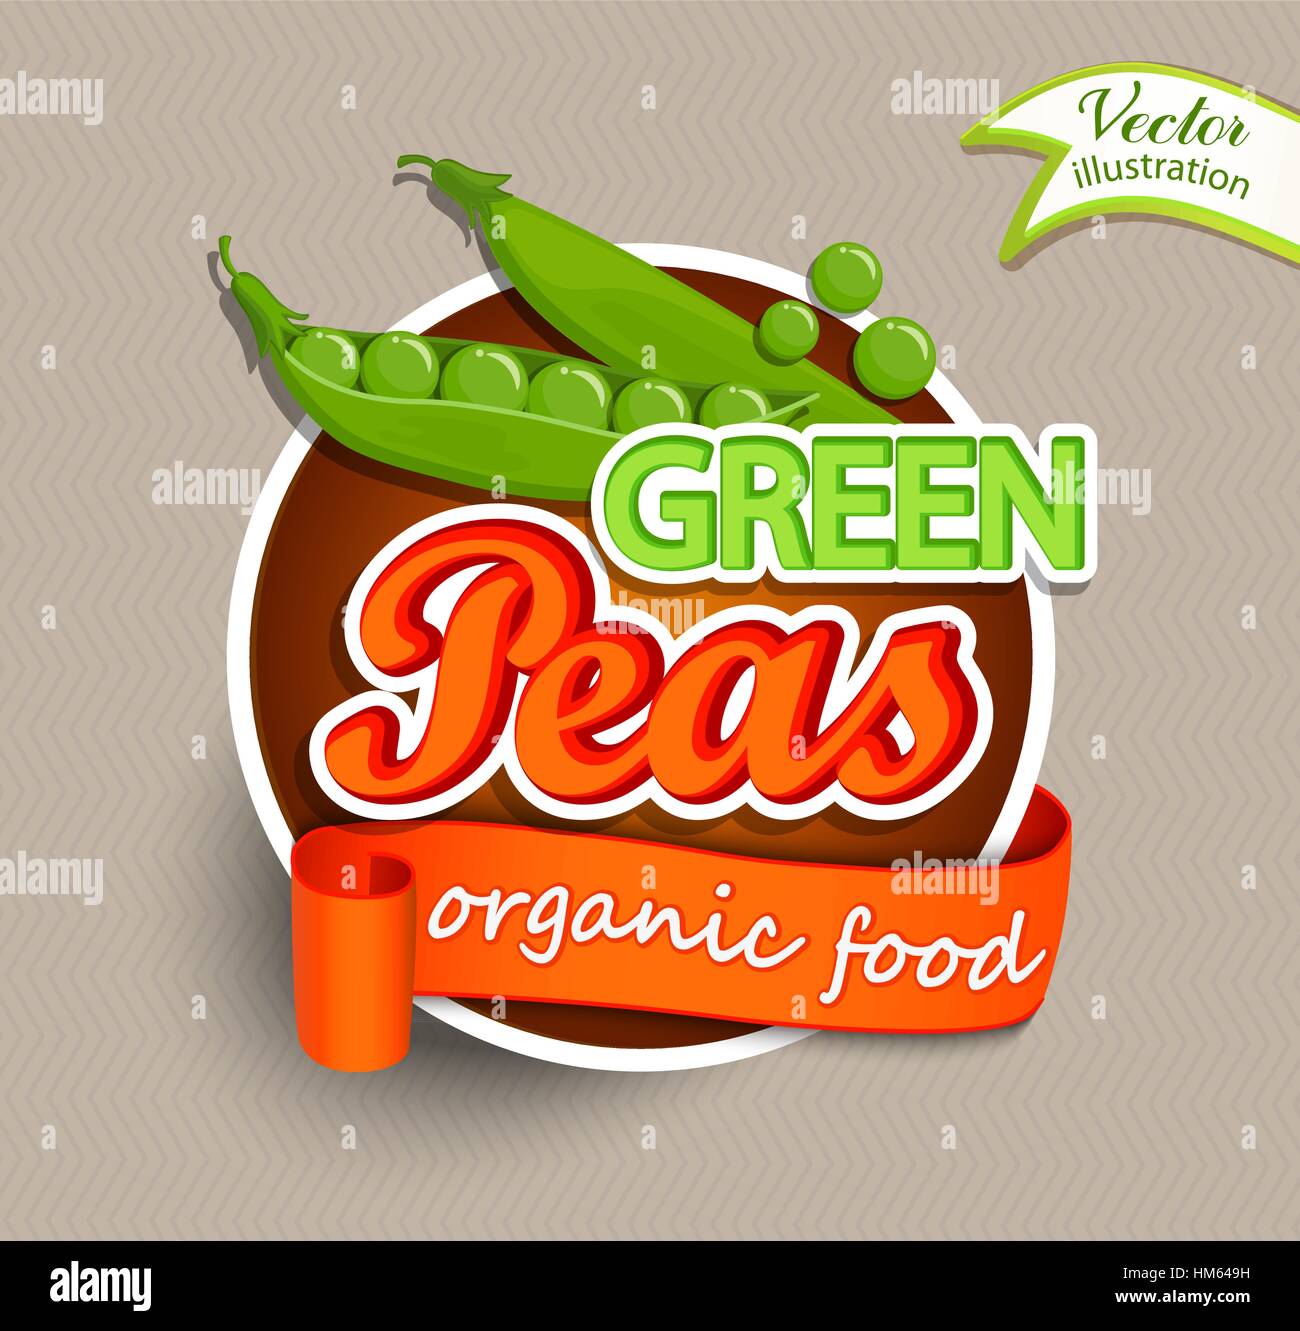 Grüne Erbsen Logo Schriftzug Typografie-Lebensmittel-Etikett oder Sticer. Bauernmarkt, Bio-Lebensmittel, natürliches Produktdesign Konzept. Vektor-Illustration. Stock Vektor